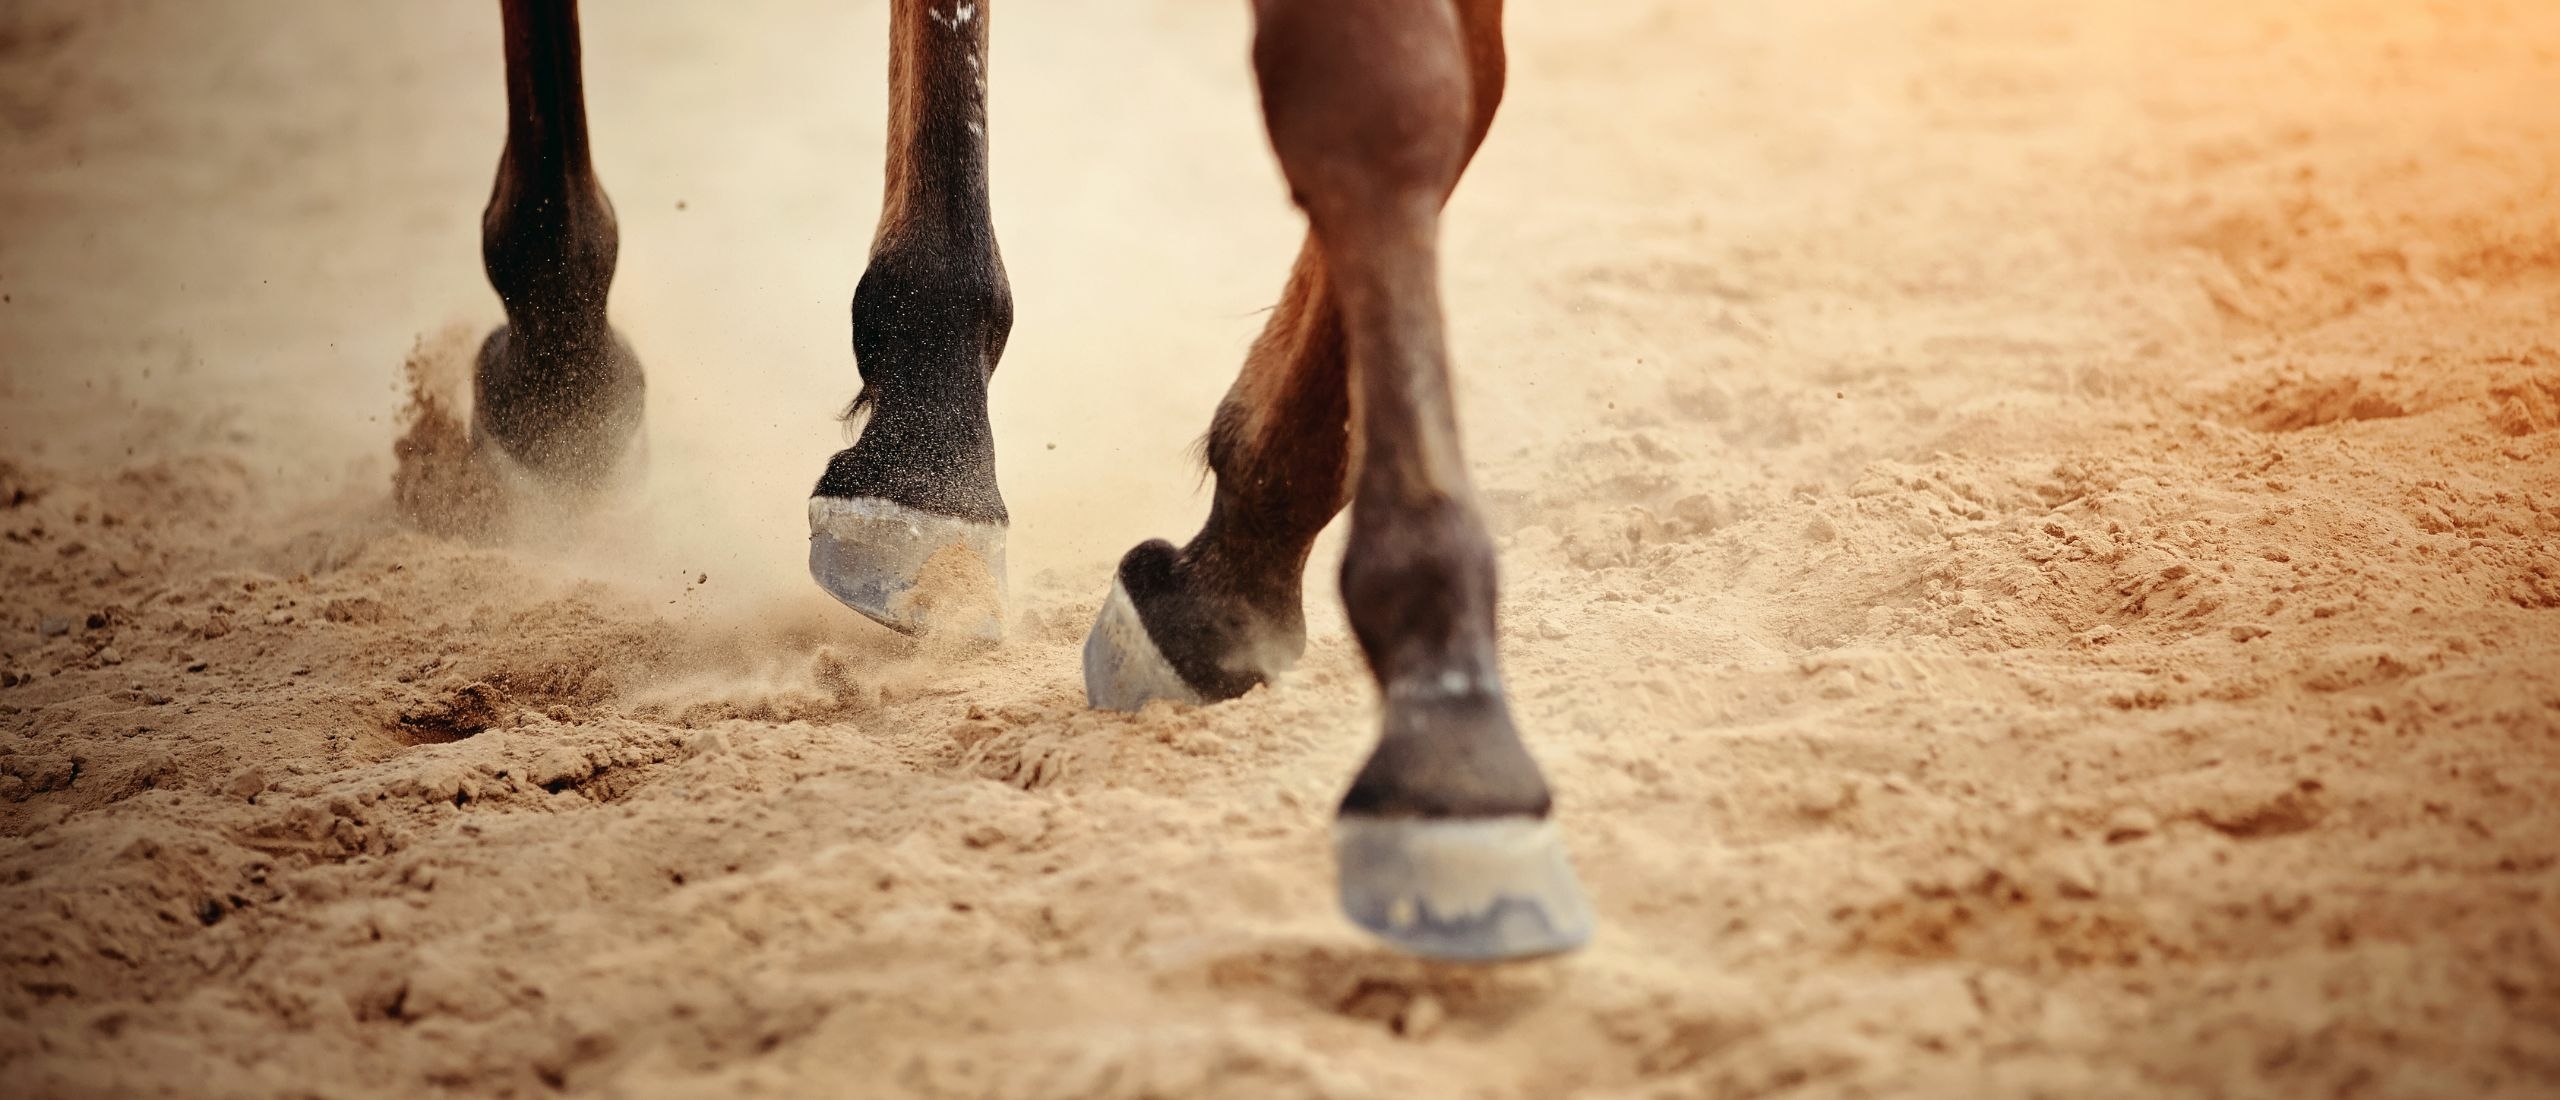 Front legs of the horse - Straightness Training